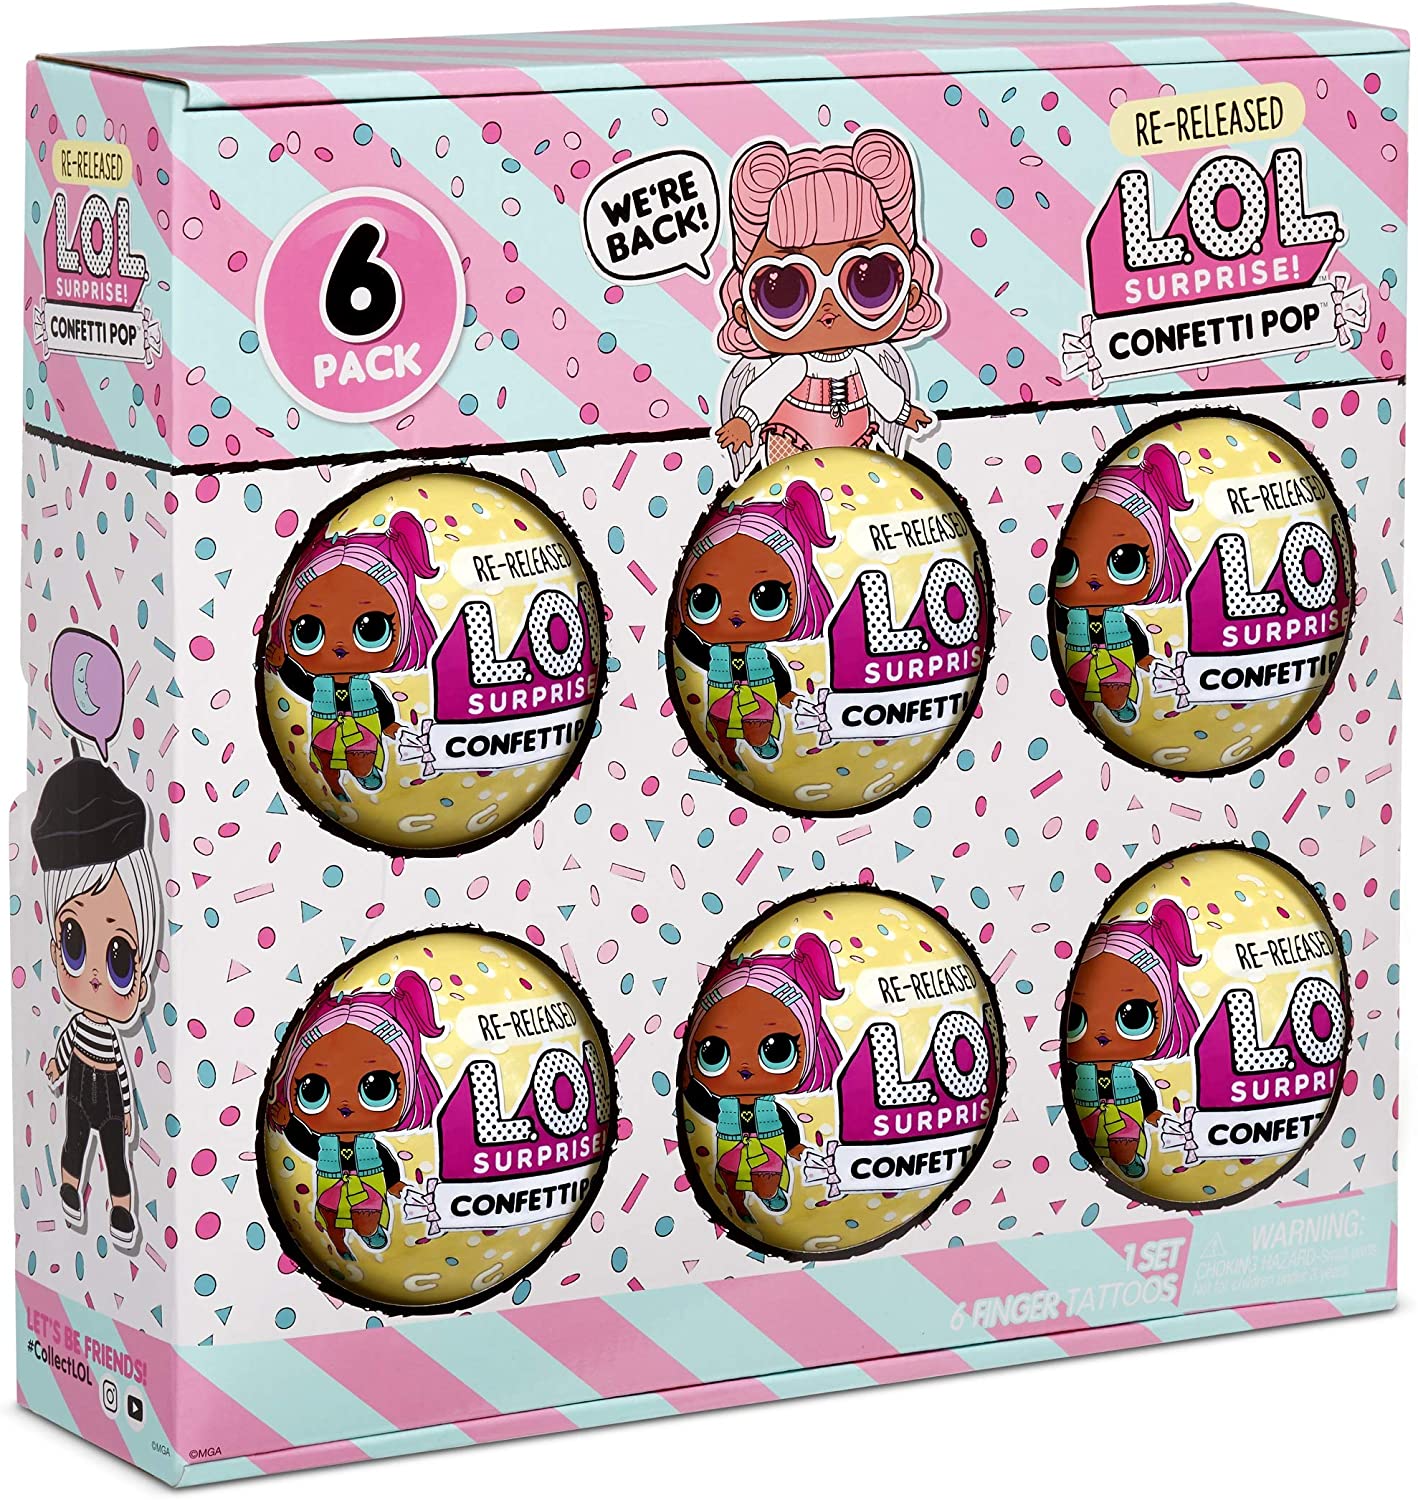 LOL Surprise Confetti Pop re-release is now available online